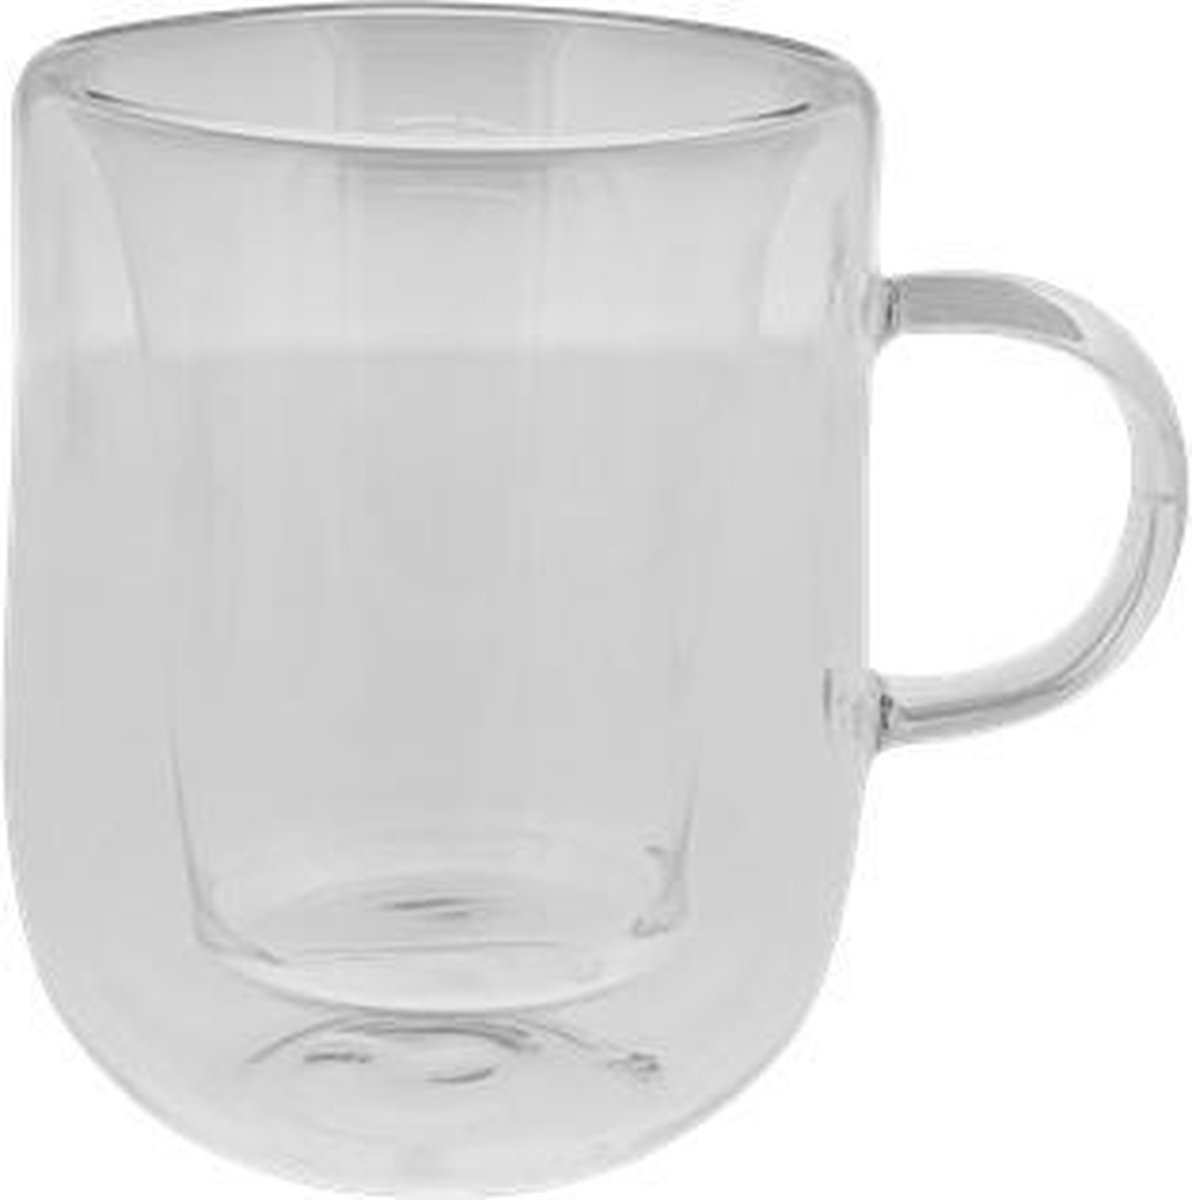 Dubbelwandig Koffie- en Theeglas - Koude dranken glas - 20cl - 200 ml |  bol.com